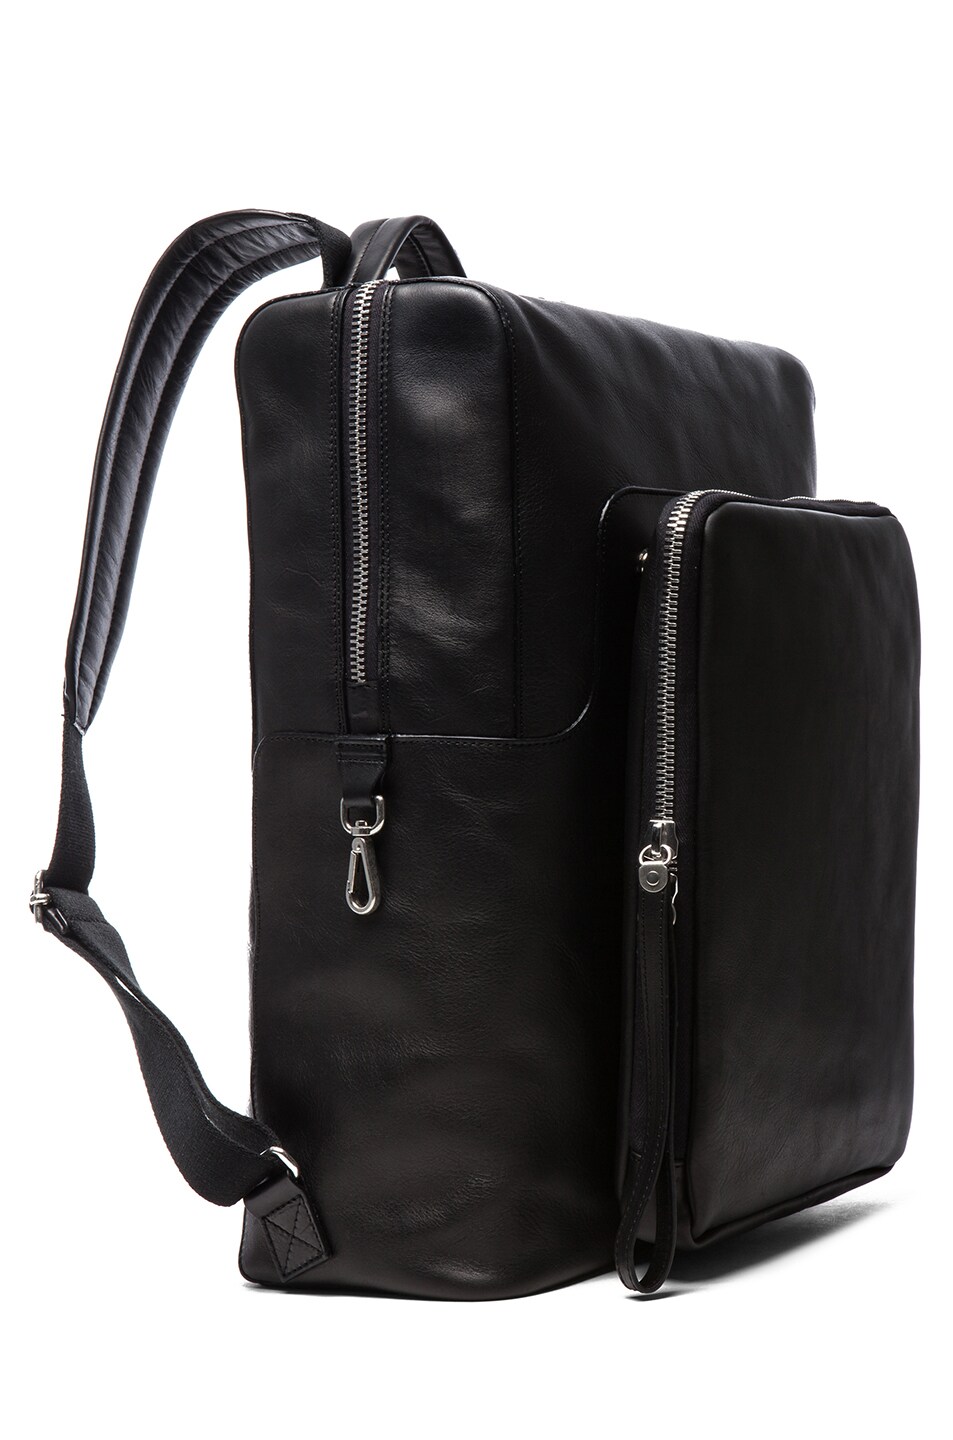 Maison Margiela Backpack in Black | FWRD